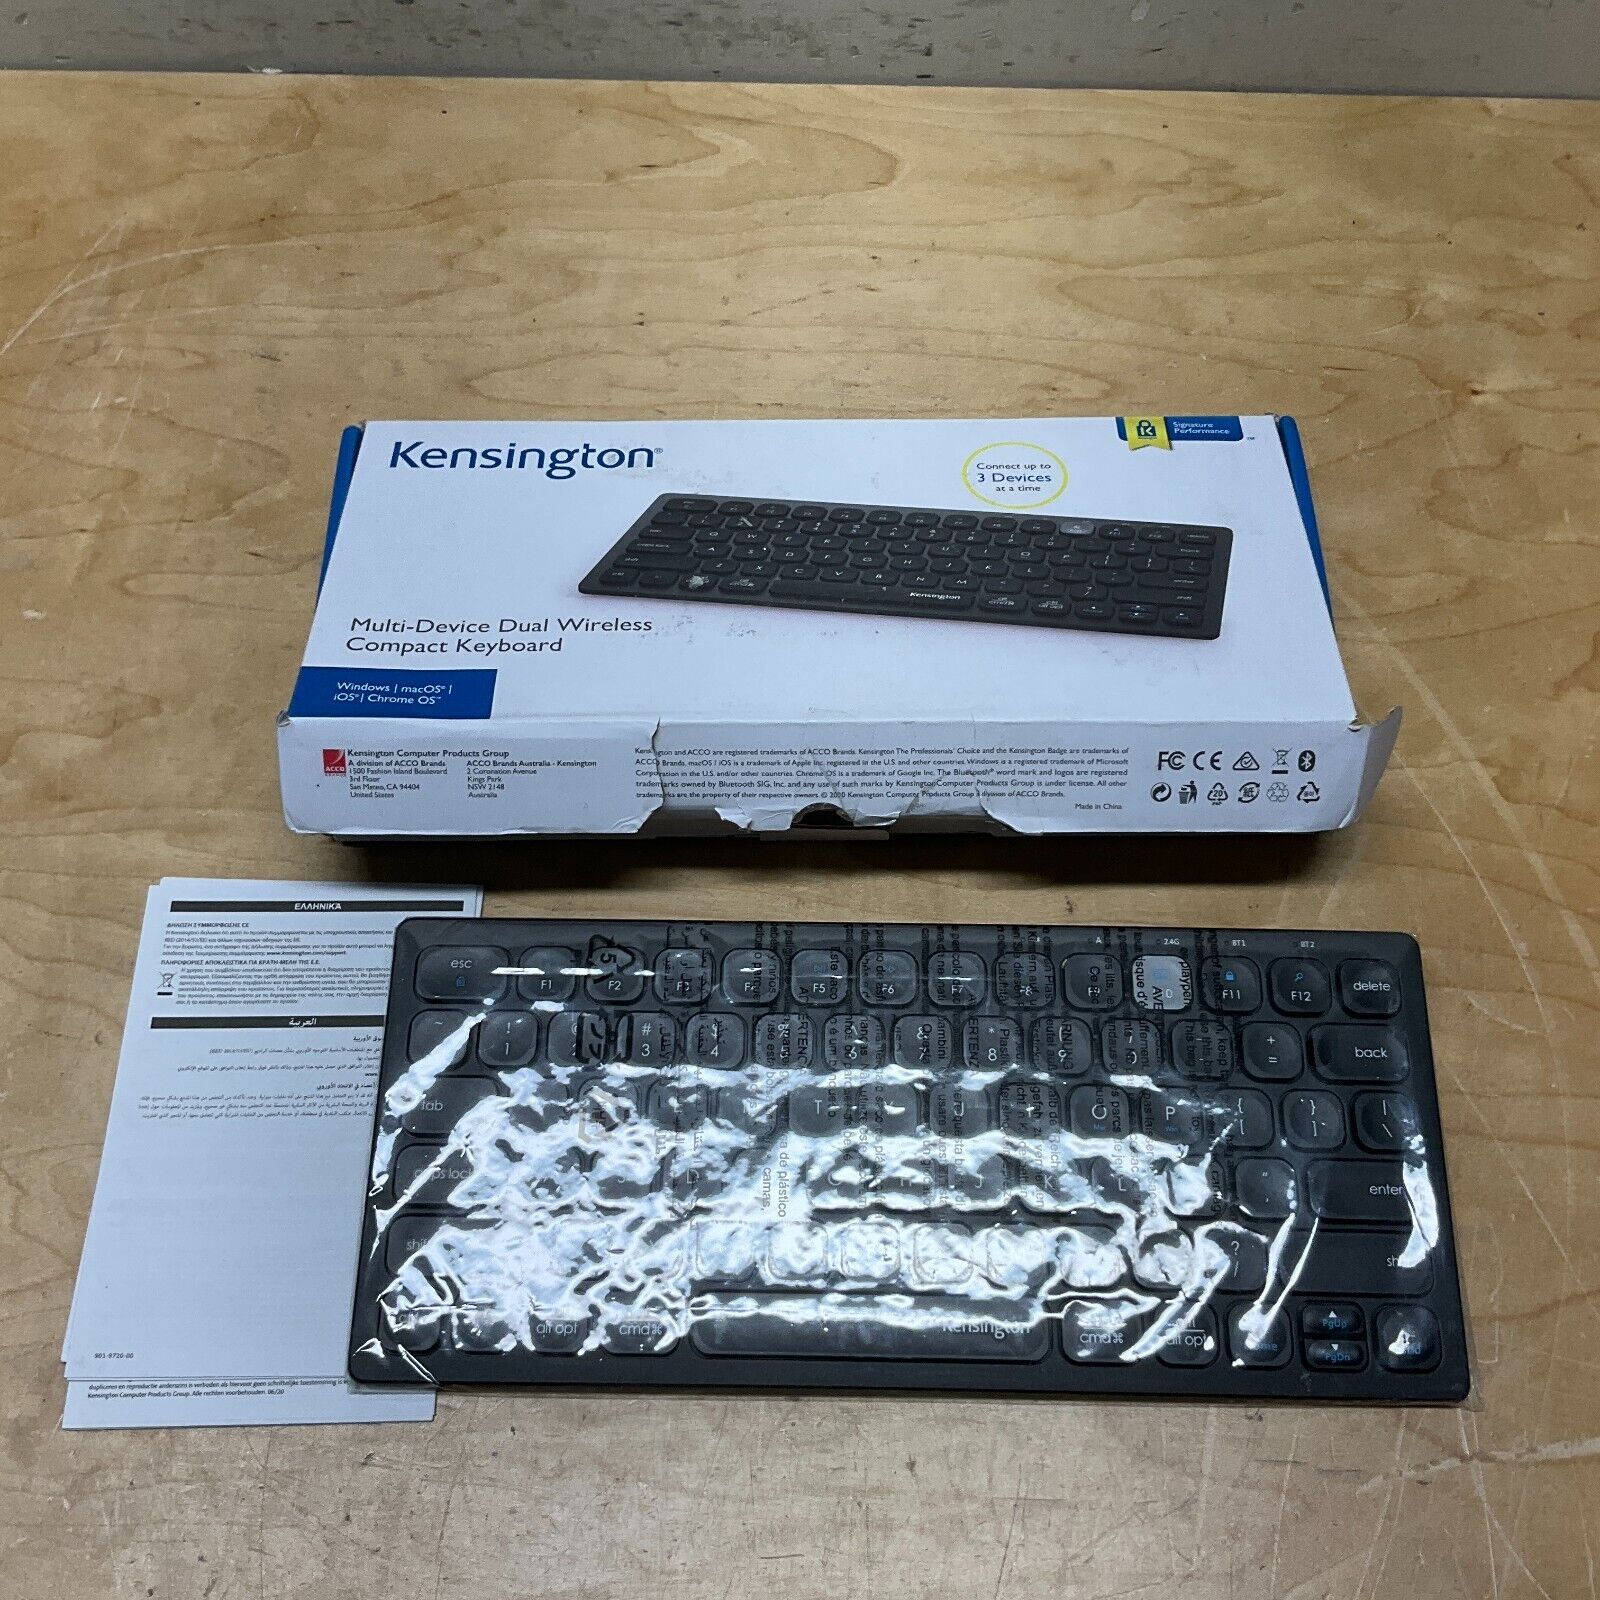 Kensington Multi-Device Dual Wireless Compact Keyboard - BLACK NEW OPEN BOX